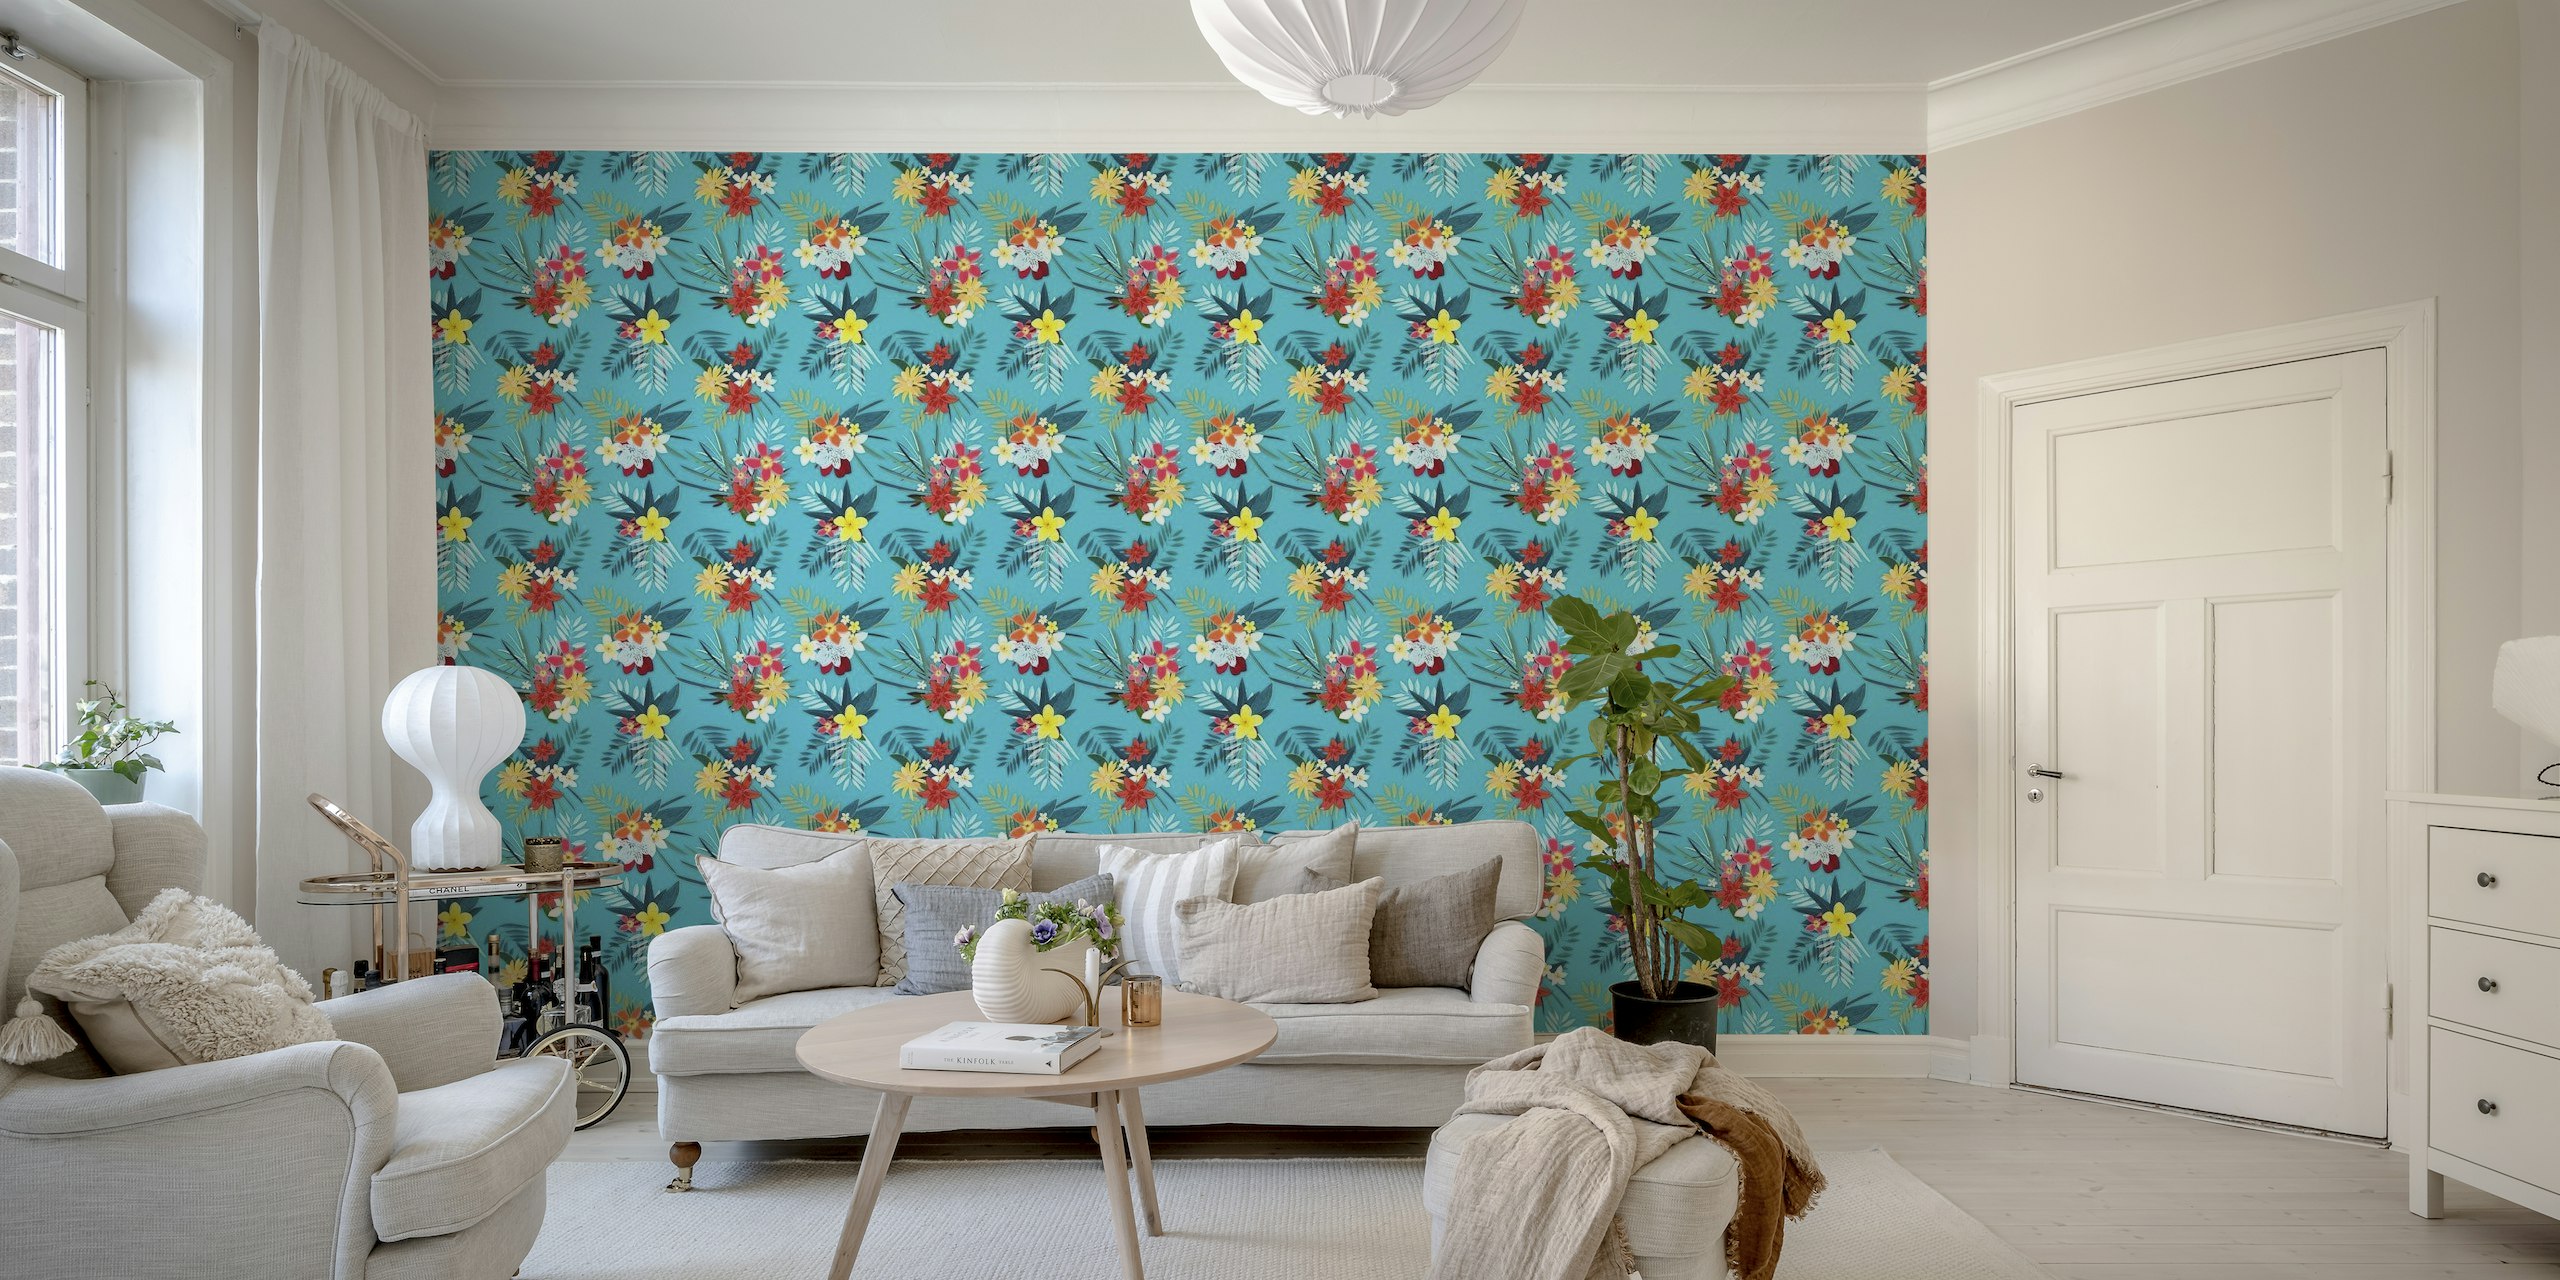 Frangipani and lily wallpaper